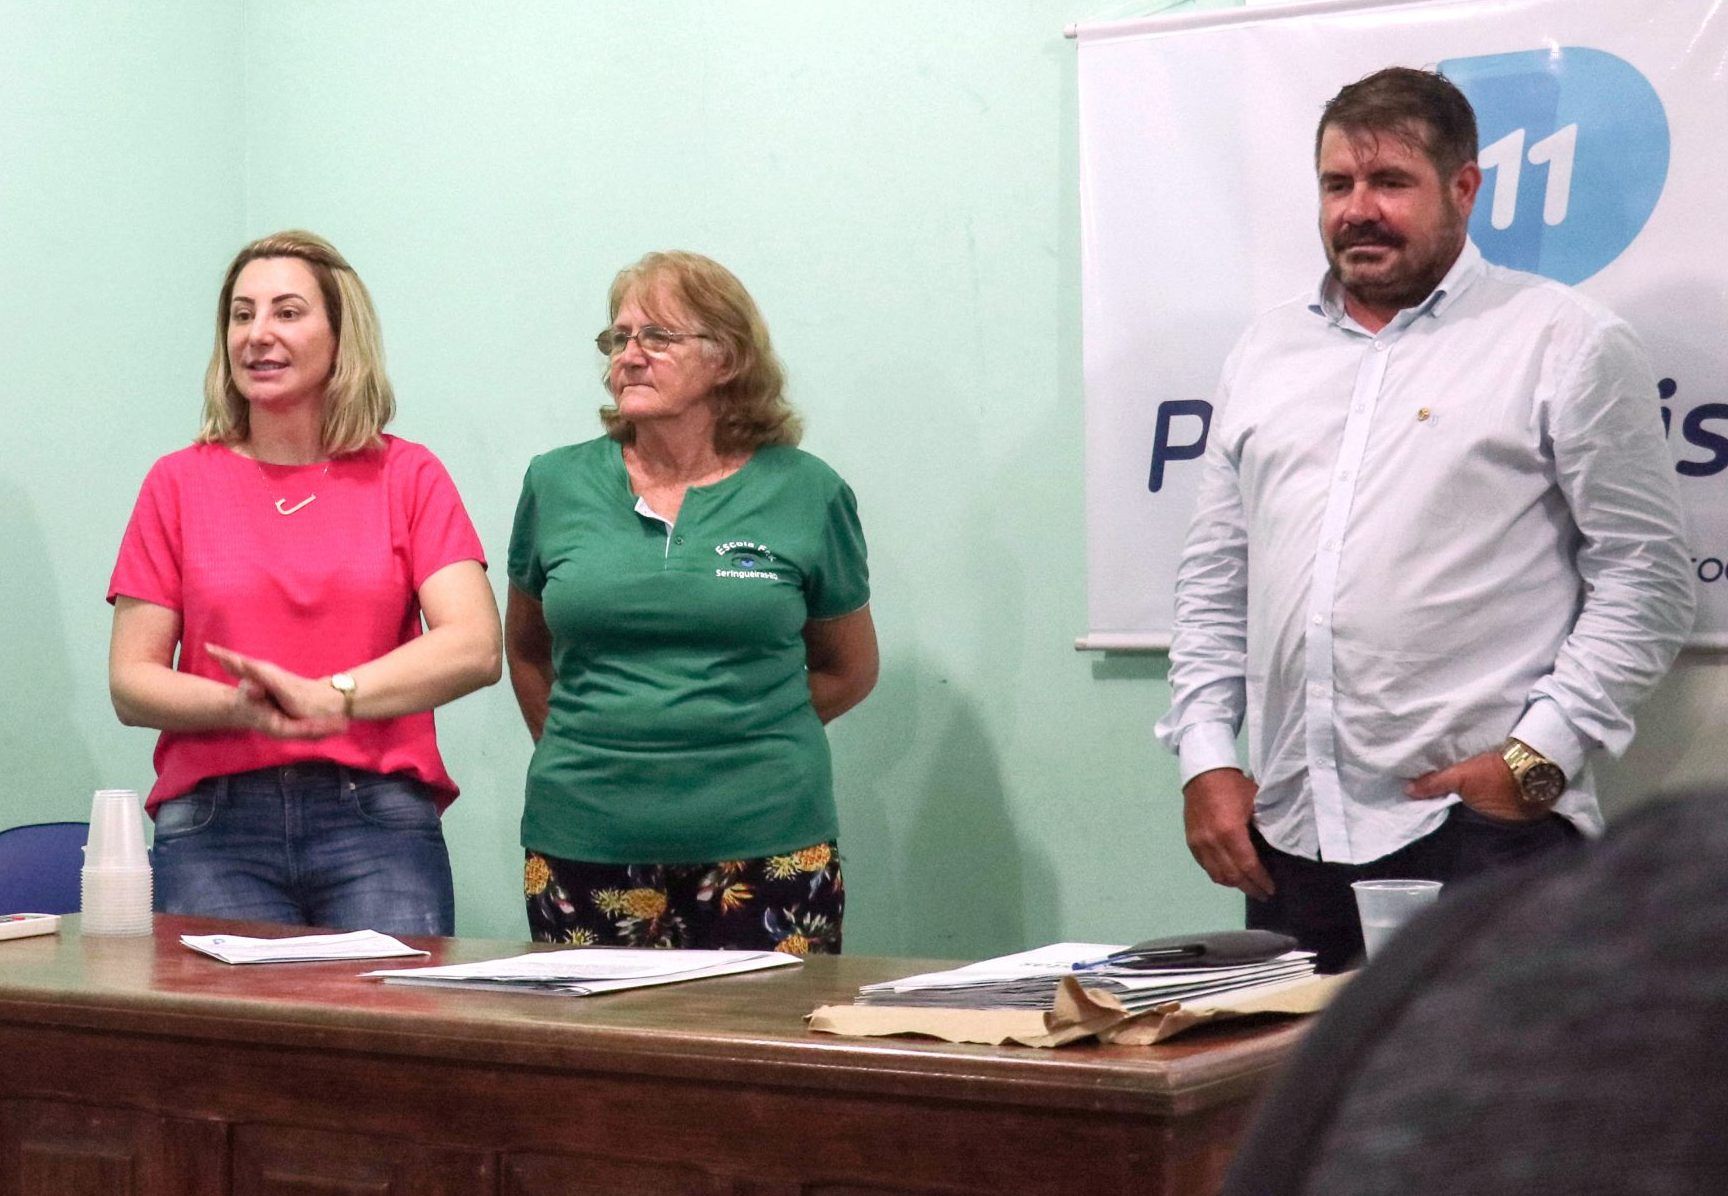 Progressistas cumprem primeira etapa de visita aos municípios de Rondônia   - eleicoes - progressistas rondonia